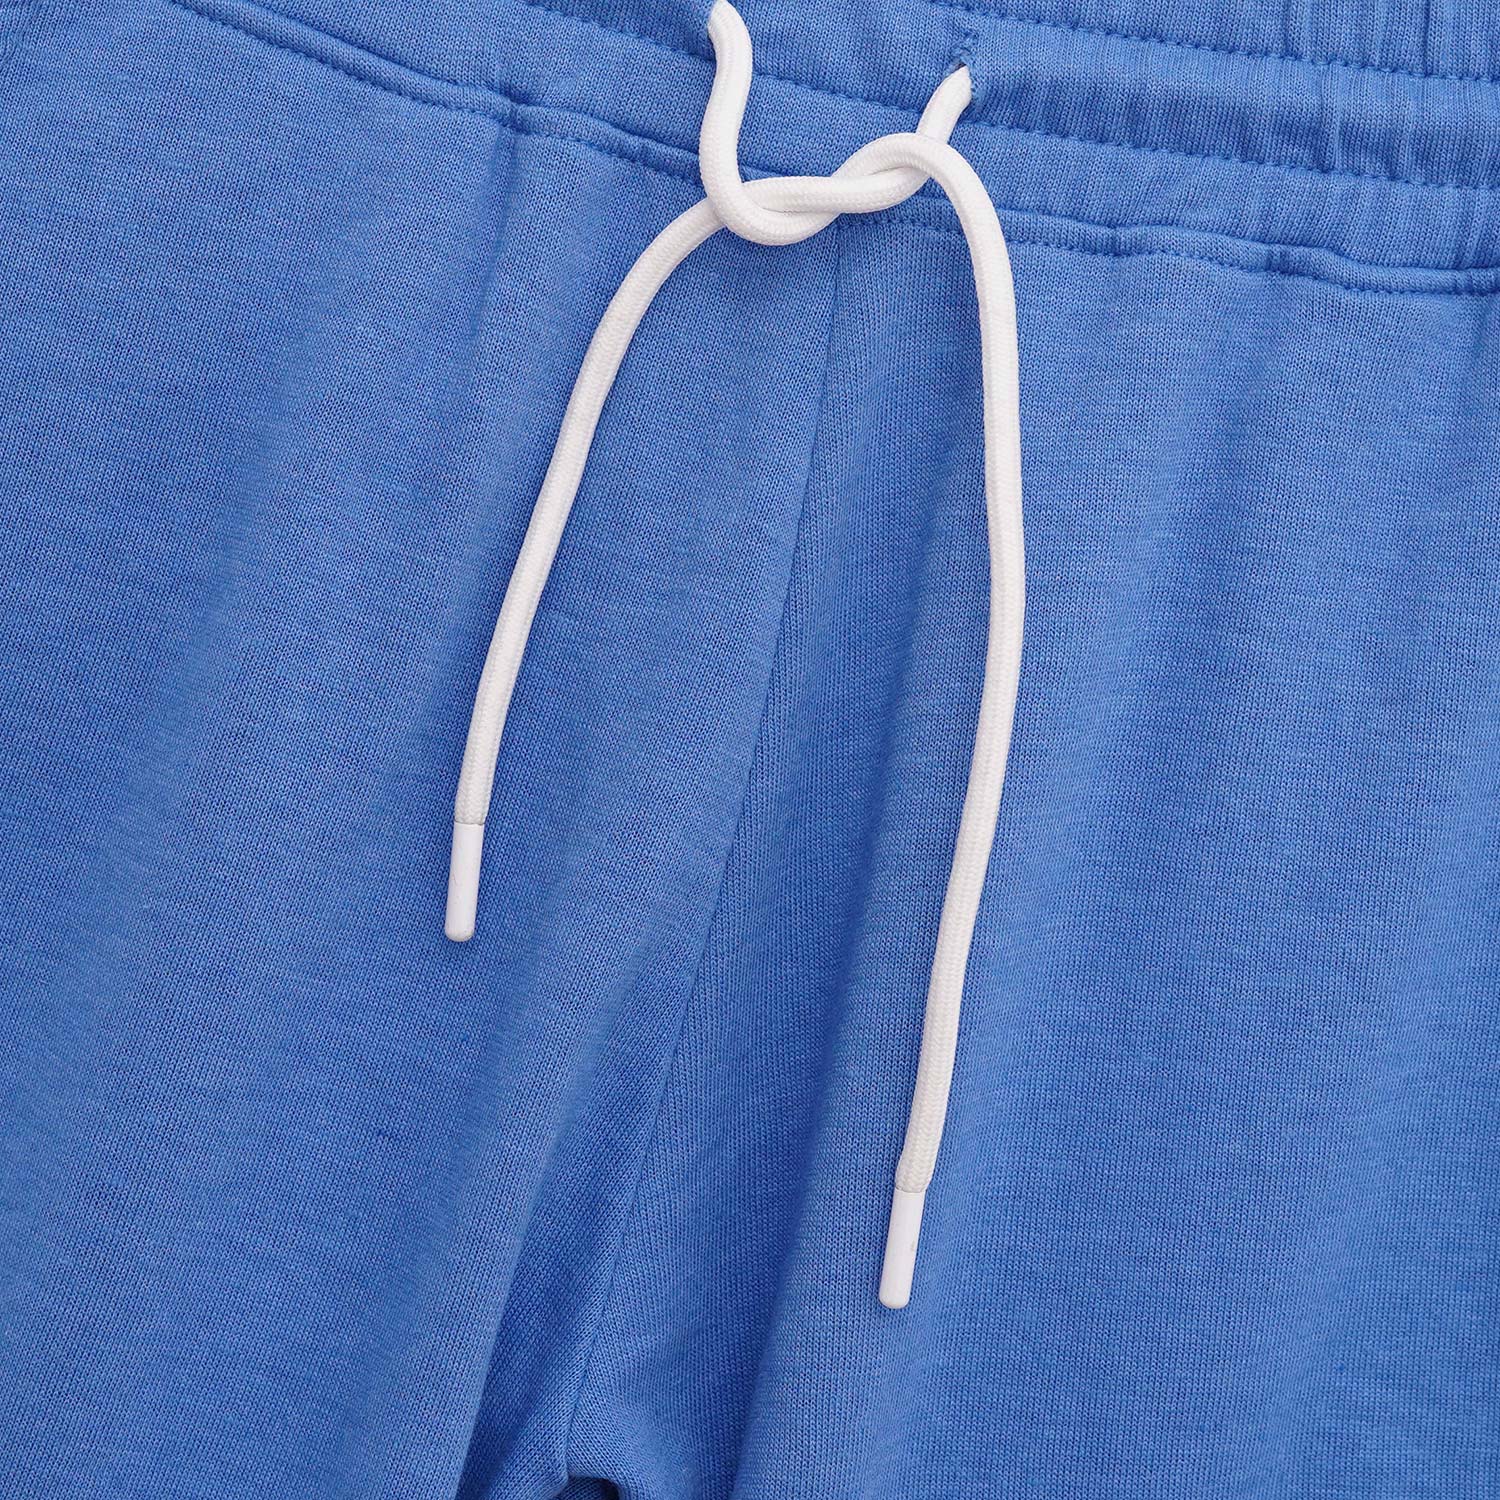 Printed Blue Two Quarter Shorts For Men's